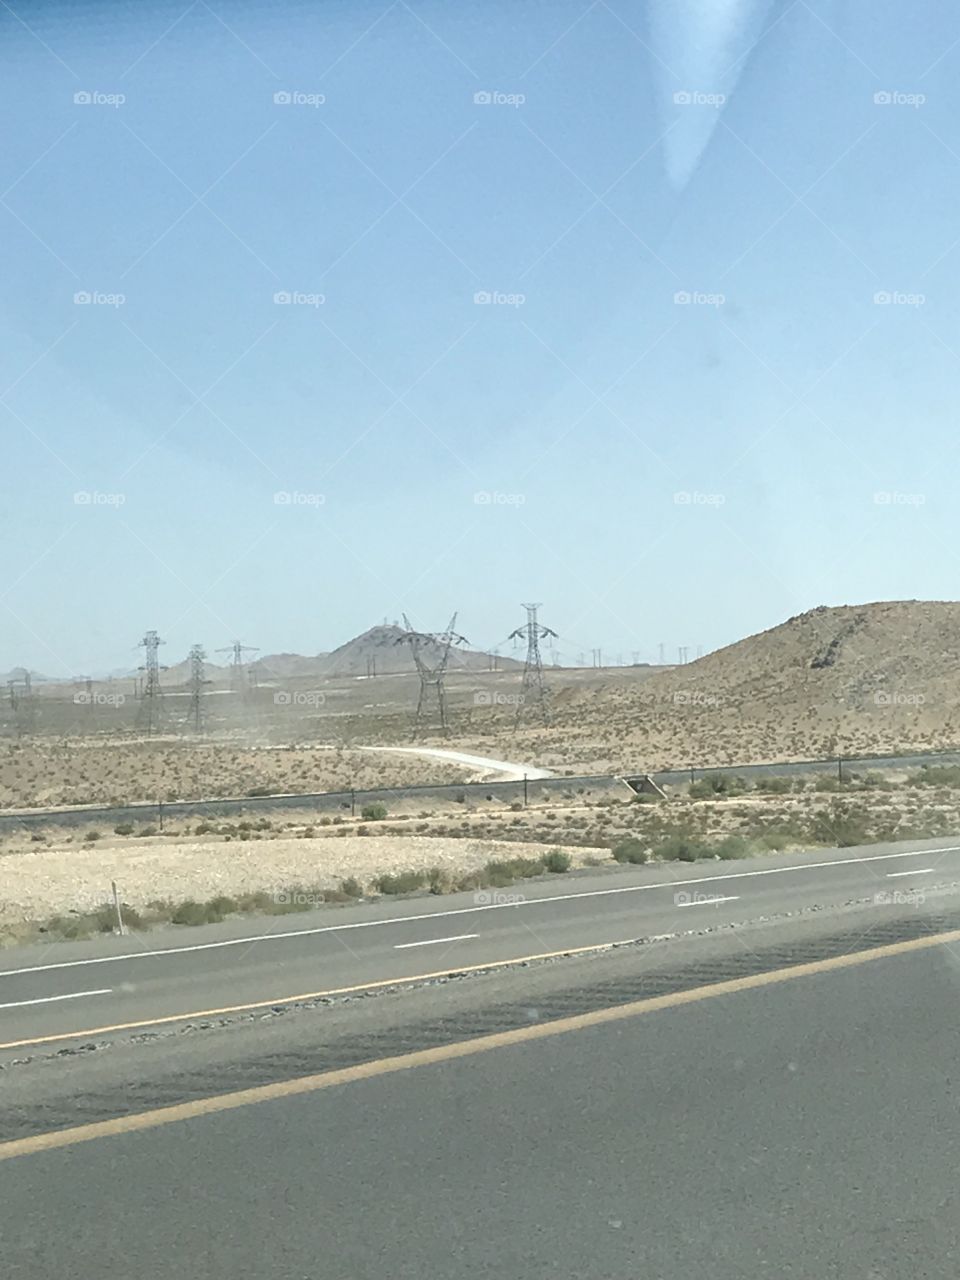 Working the desert